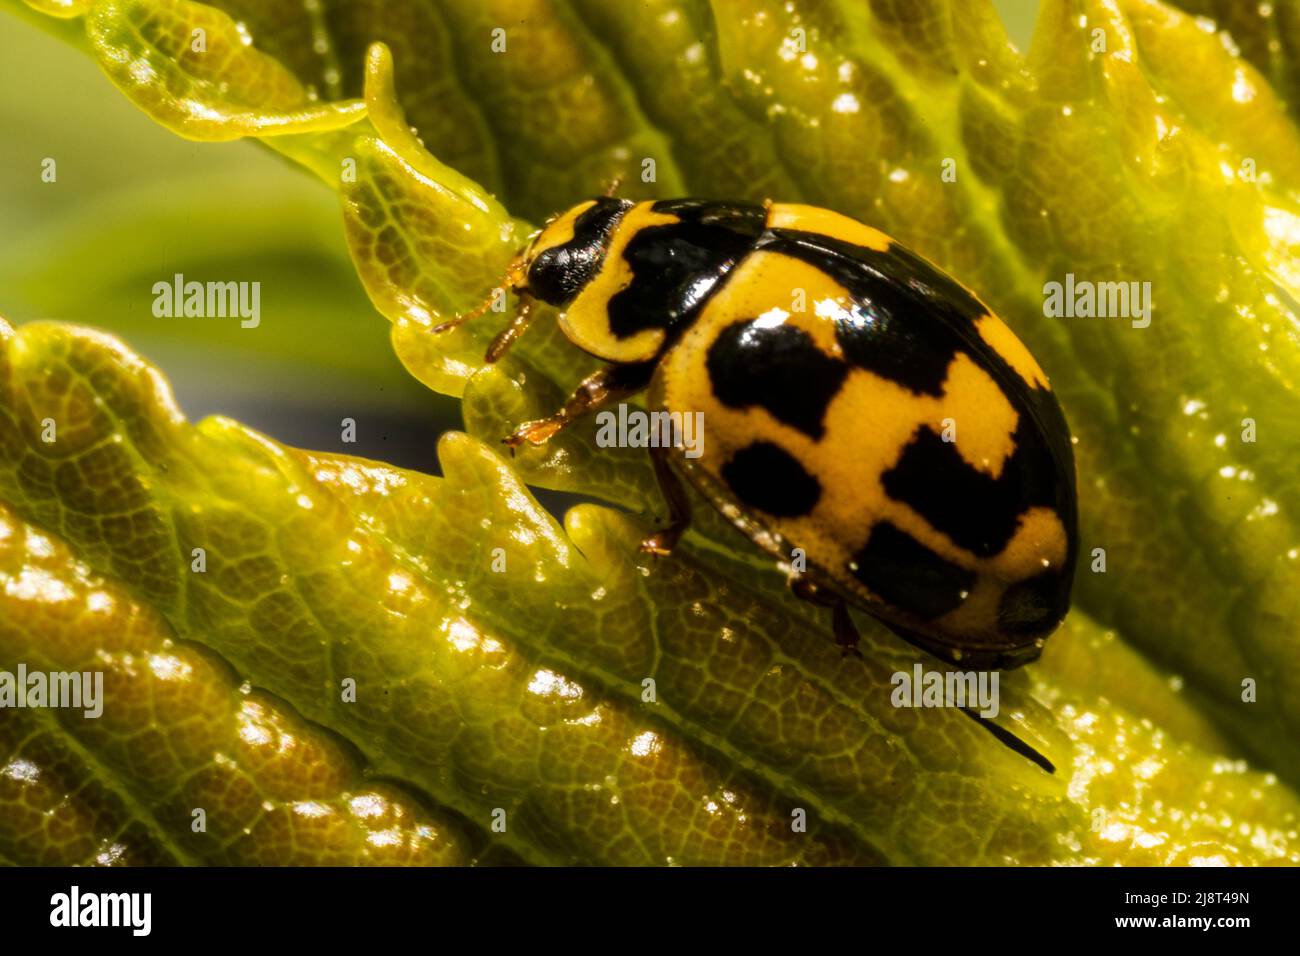 Macro side view of a twenty-two spot ladybug on a leaf Stock Photo